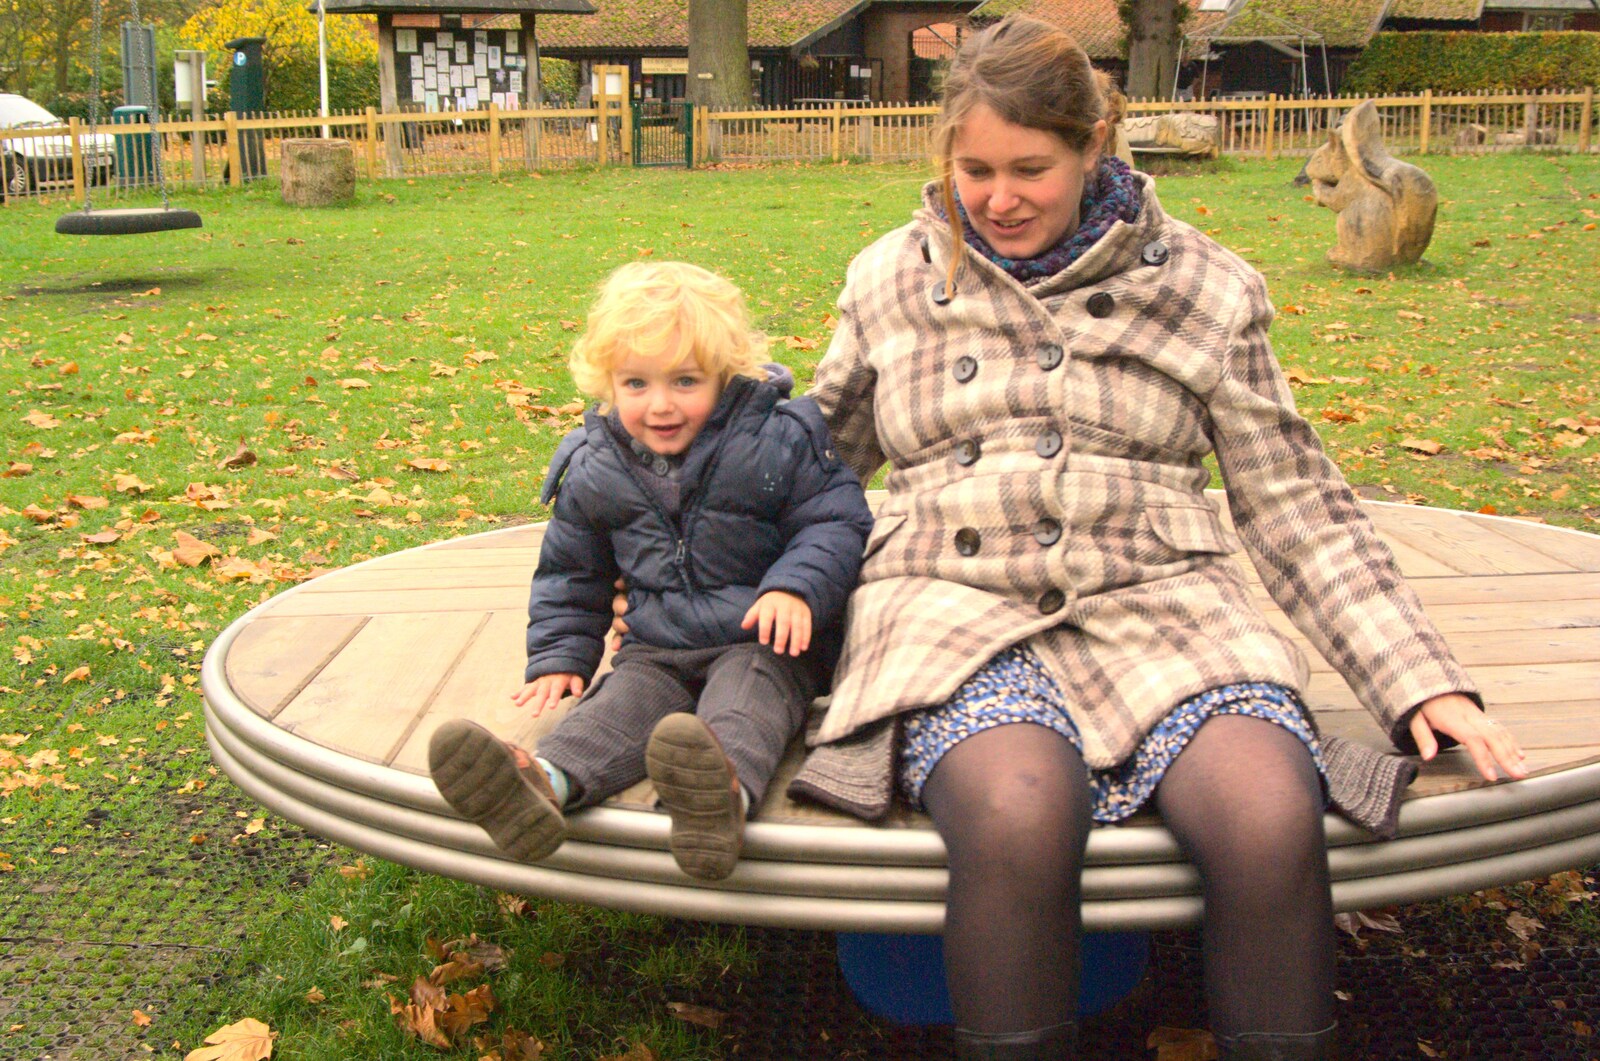 Fred and Isobel spin round from Autumn in Thornham Estate, Thornham, Suffolk - 6th November 2011